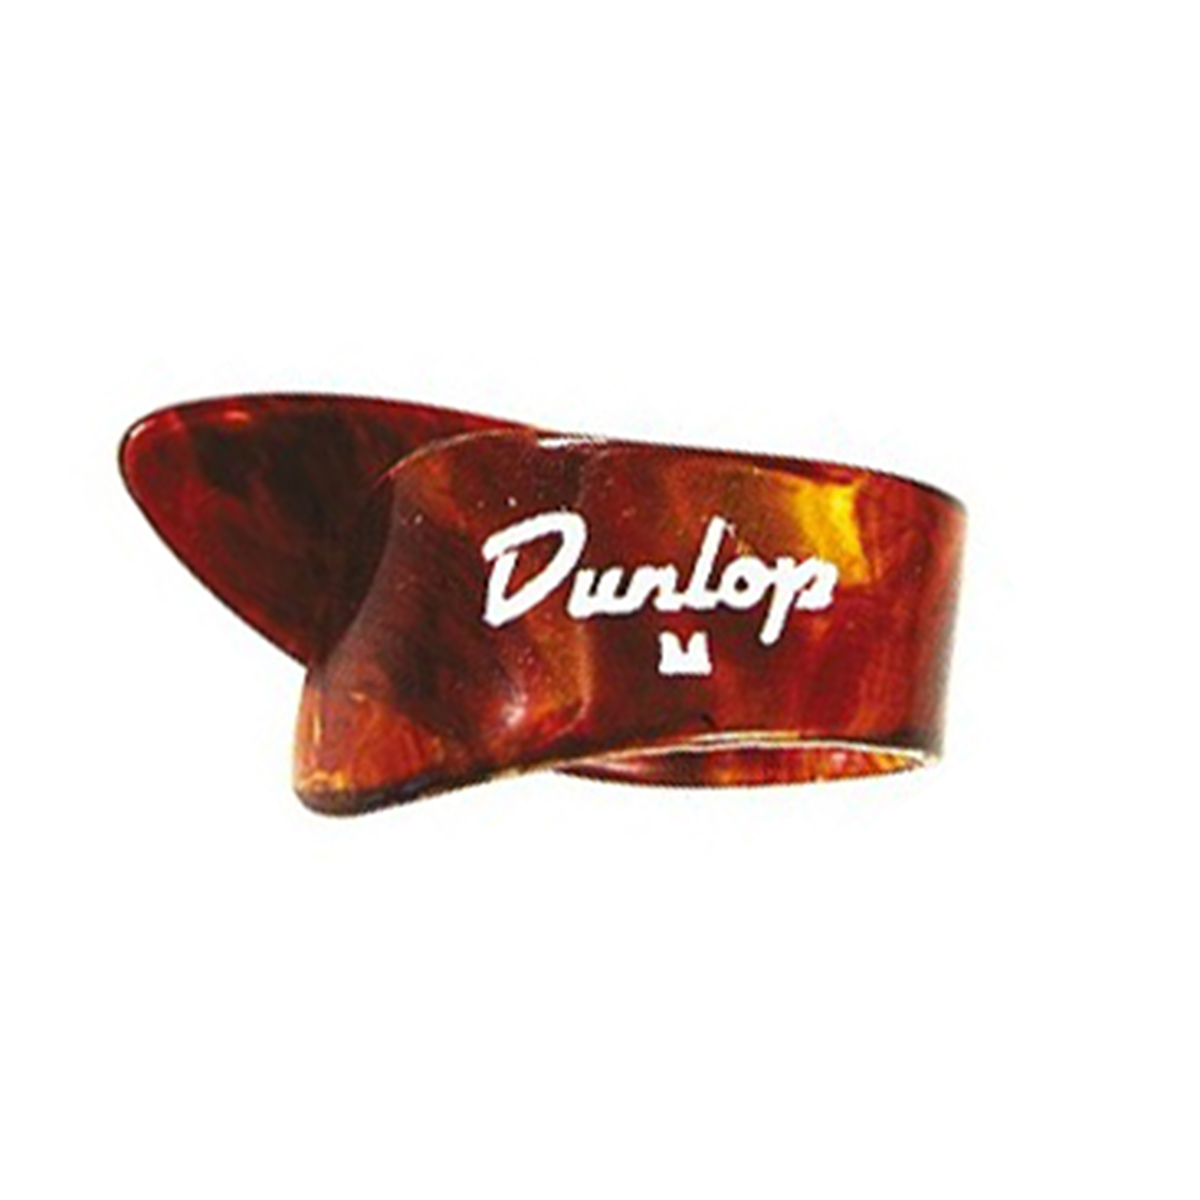 Dunlop - Onglet écaille - 9022 M